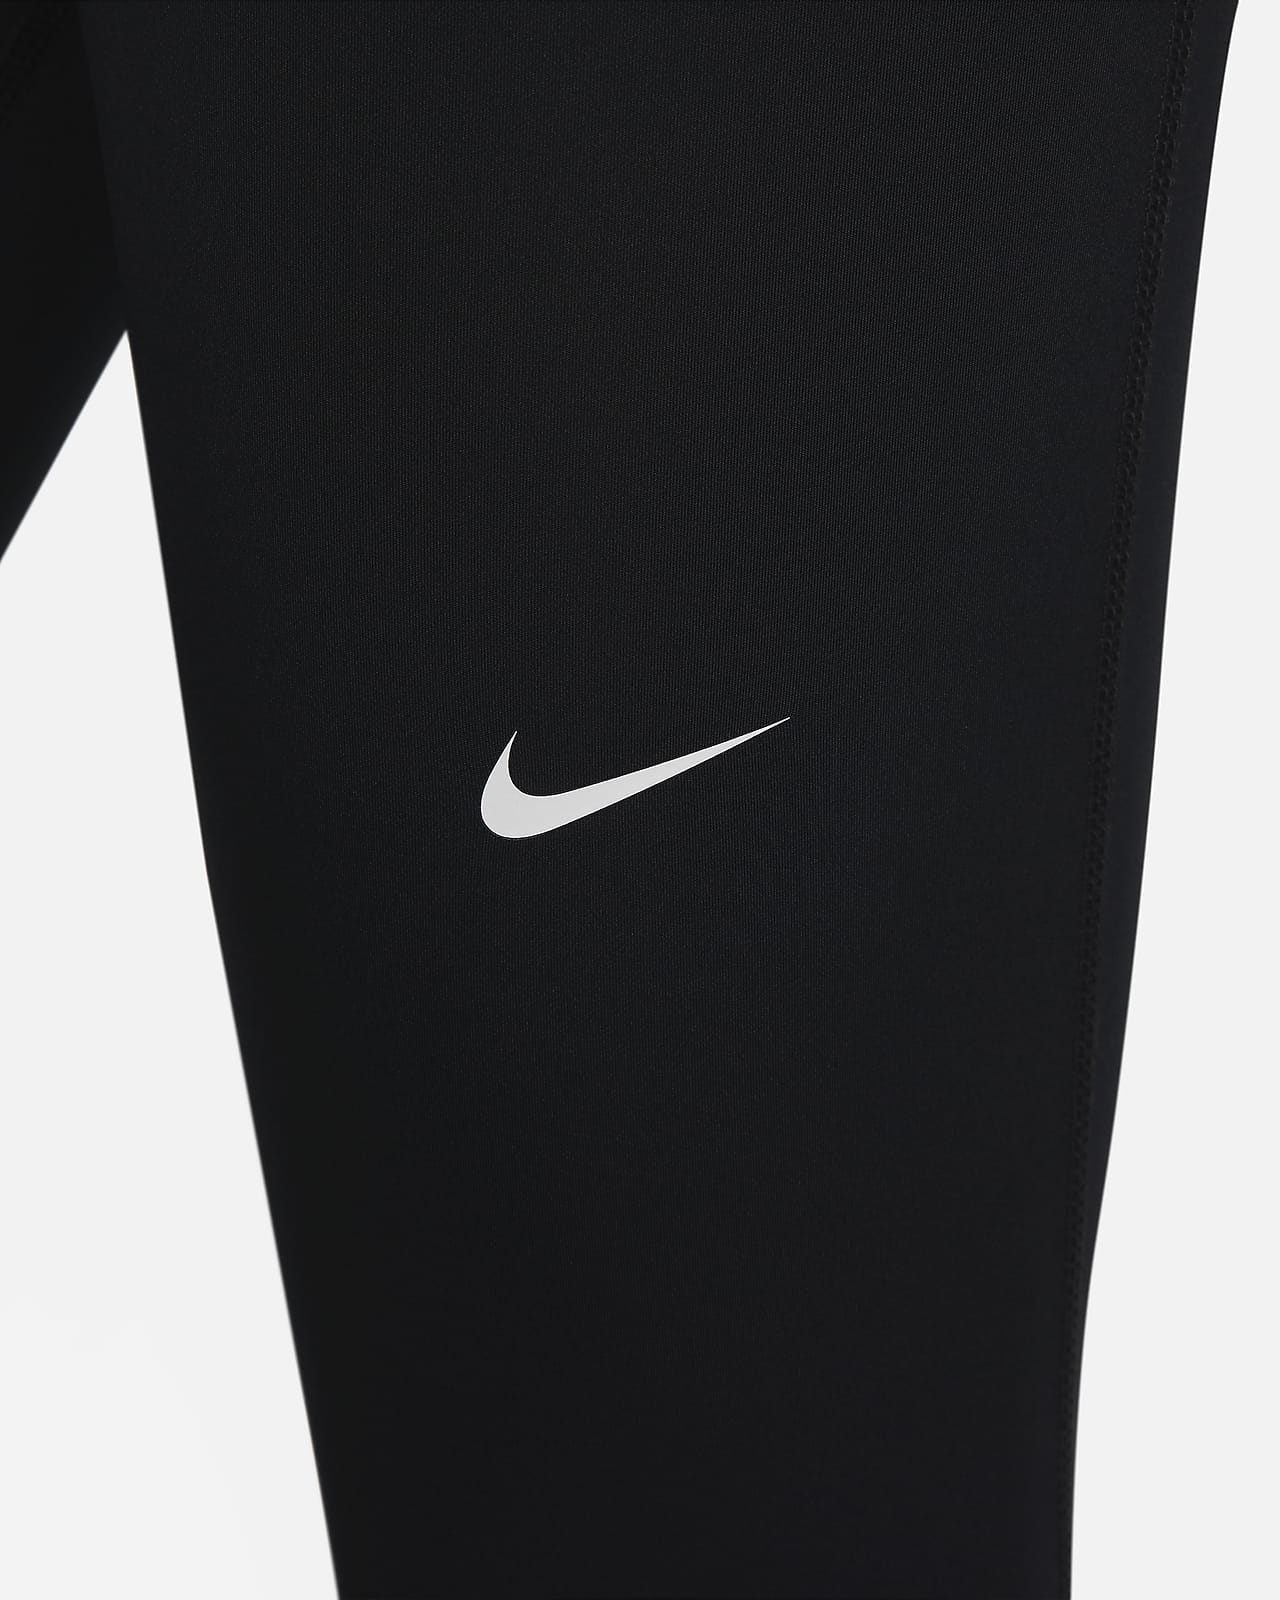 Nike 365 Legging in Cinnabar & White